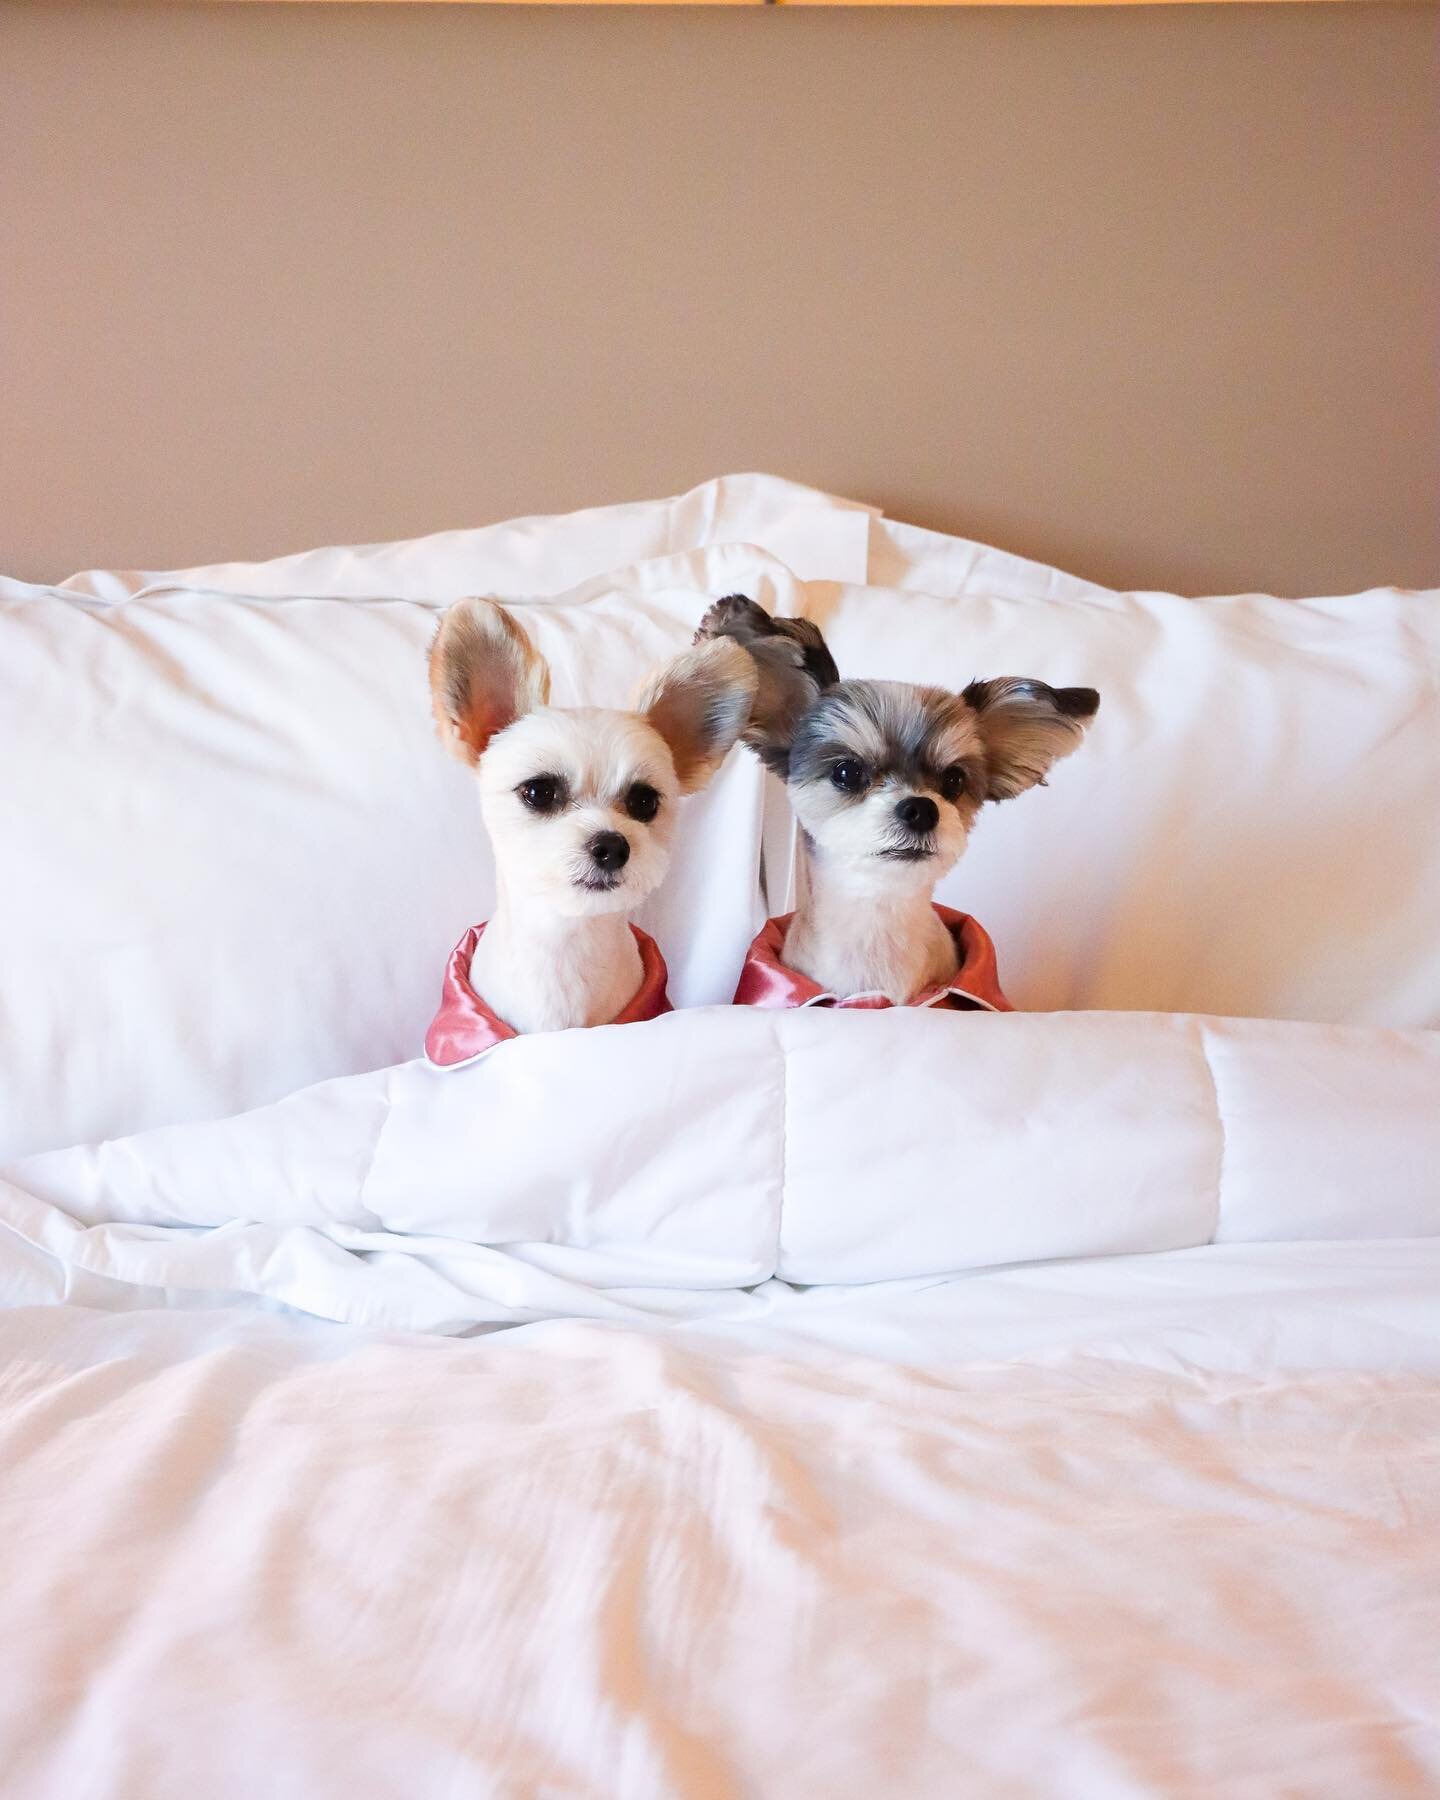 &ldquo;Good Morning LA&hellip;.Breakfast in Bed pronto!&rdquo; - Tinkerbelle &amp; Belle 

🏨: @sheratonuniversal 

#sheratonuniversal #bonvoyagebelles #travelingtink #dogsofworld #dogsoflosangeles #dogsofnyc #instapets #pupfluencer #famousdogs #losa